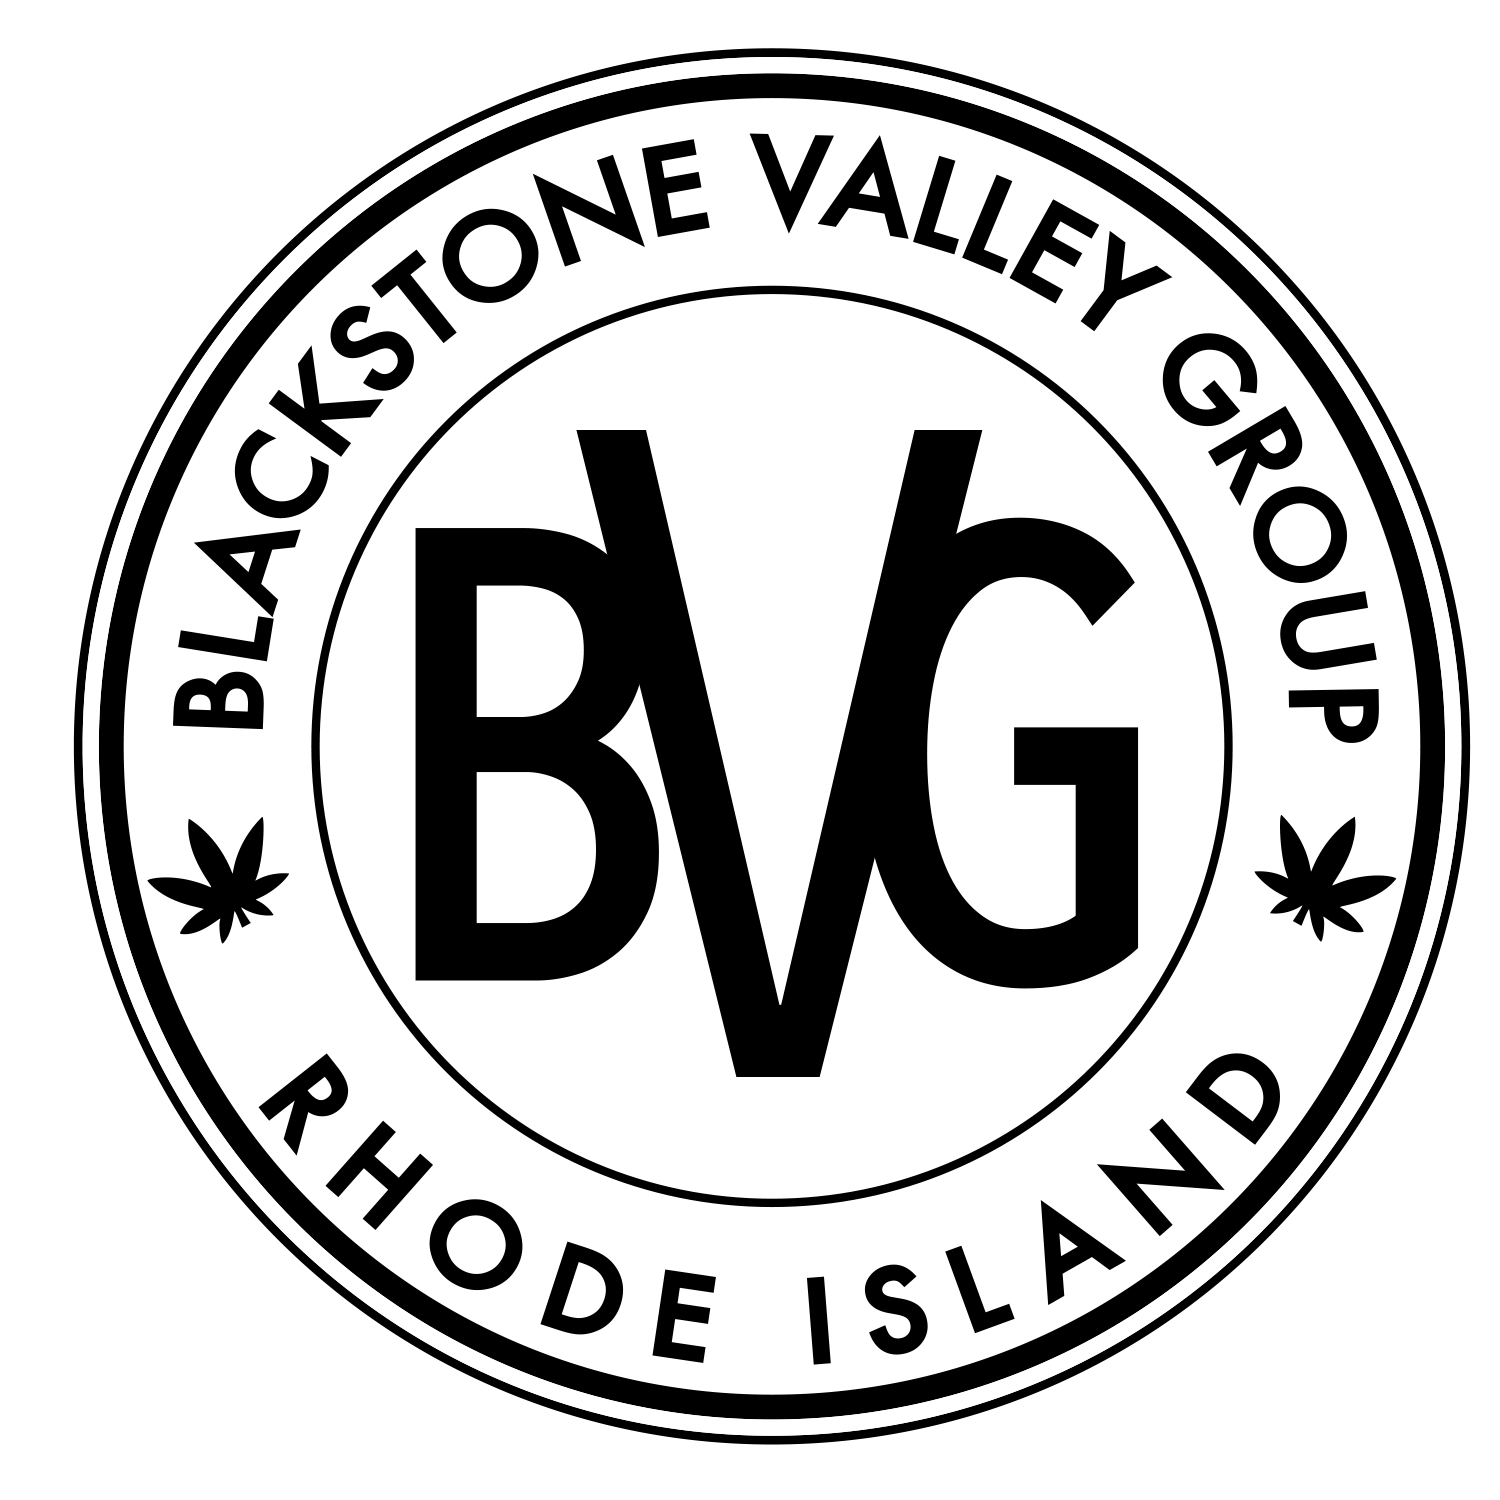 Blackstone Valley Group